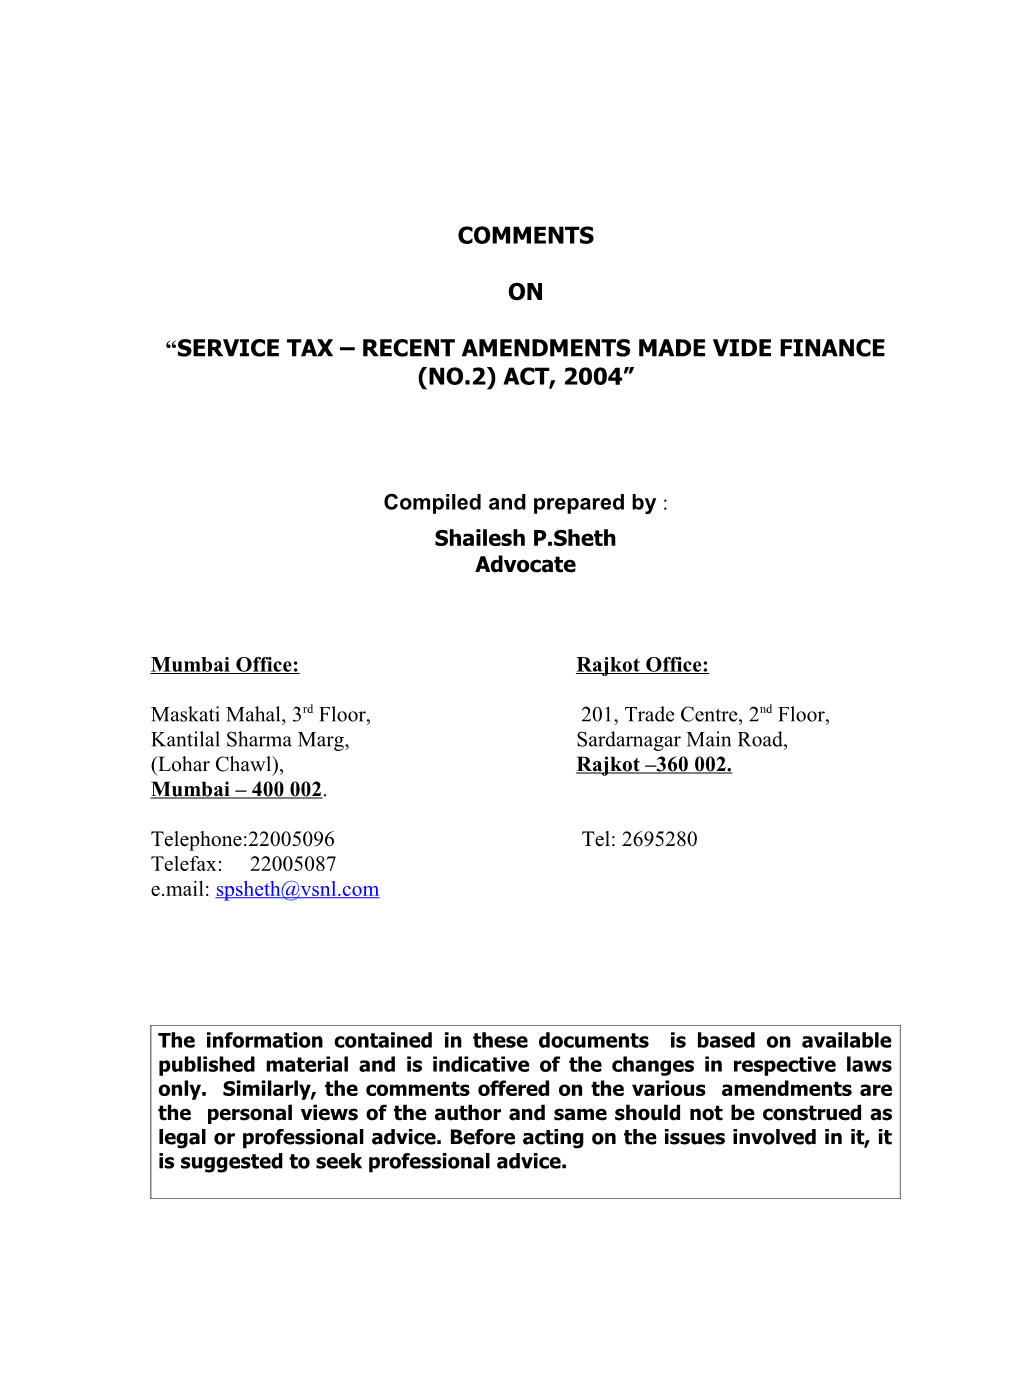 Service Tax Recent Amendments Made Vide Finance (No.2) Act, 2004